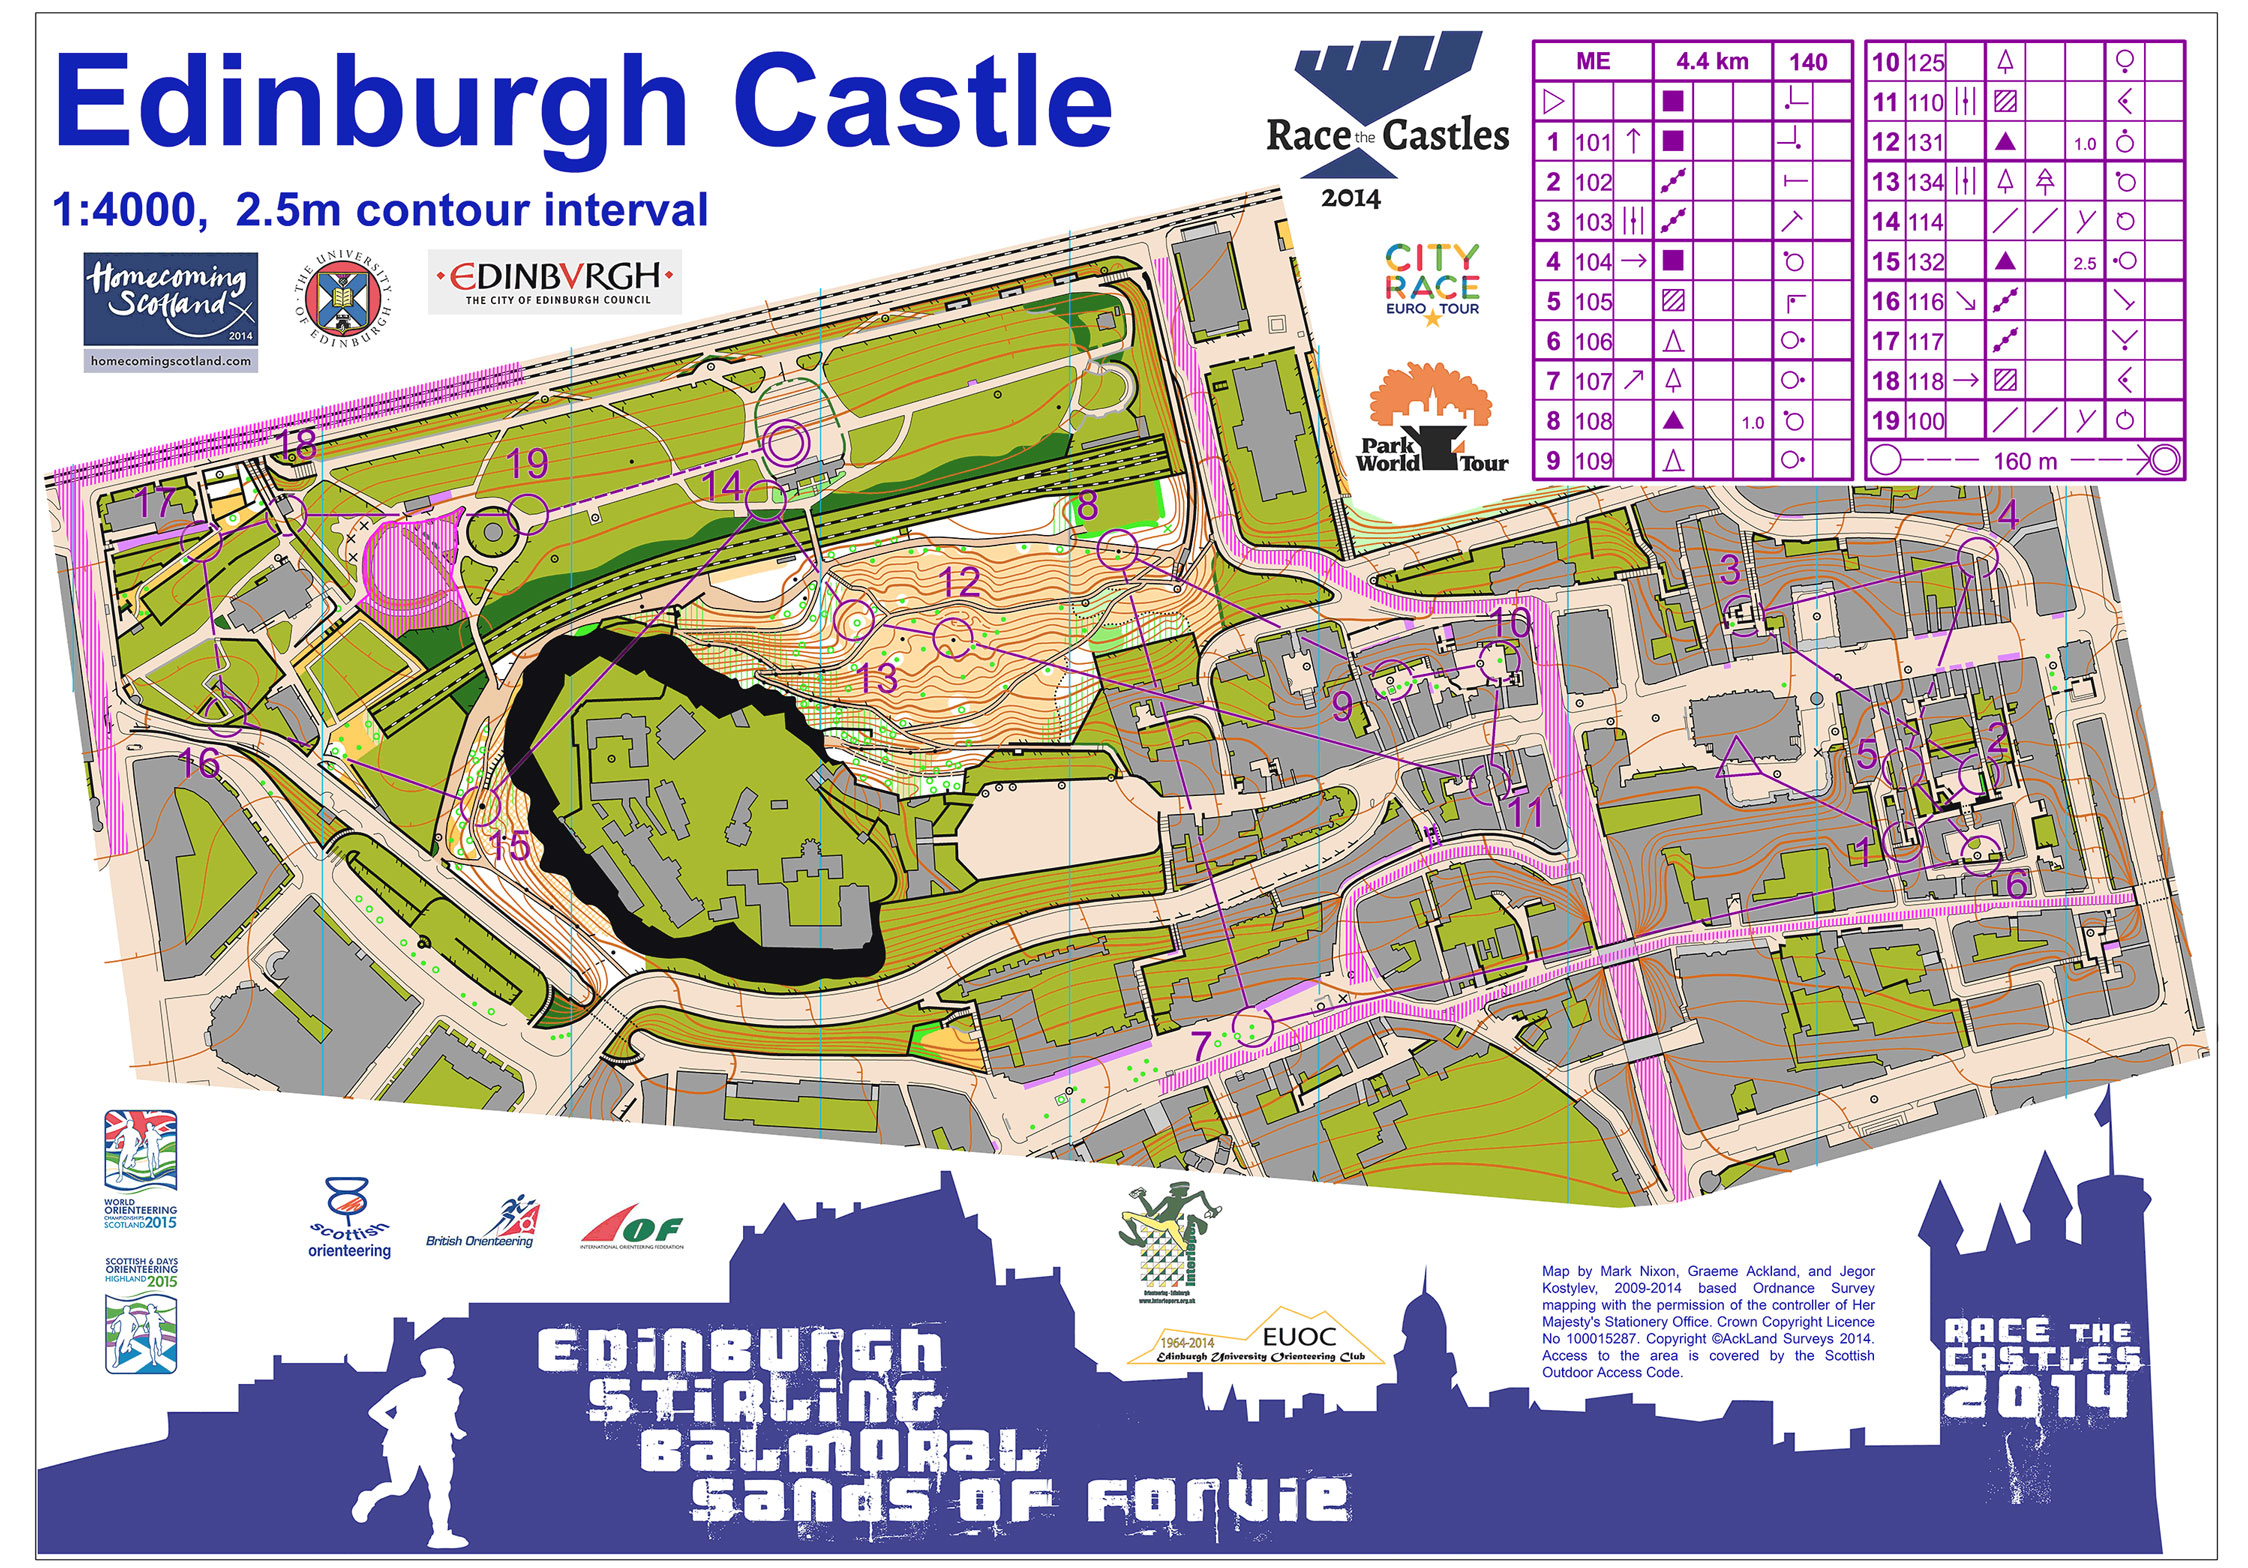 Race the Castles Edinburgh (11.10.2014)